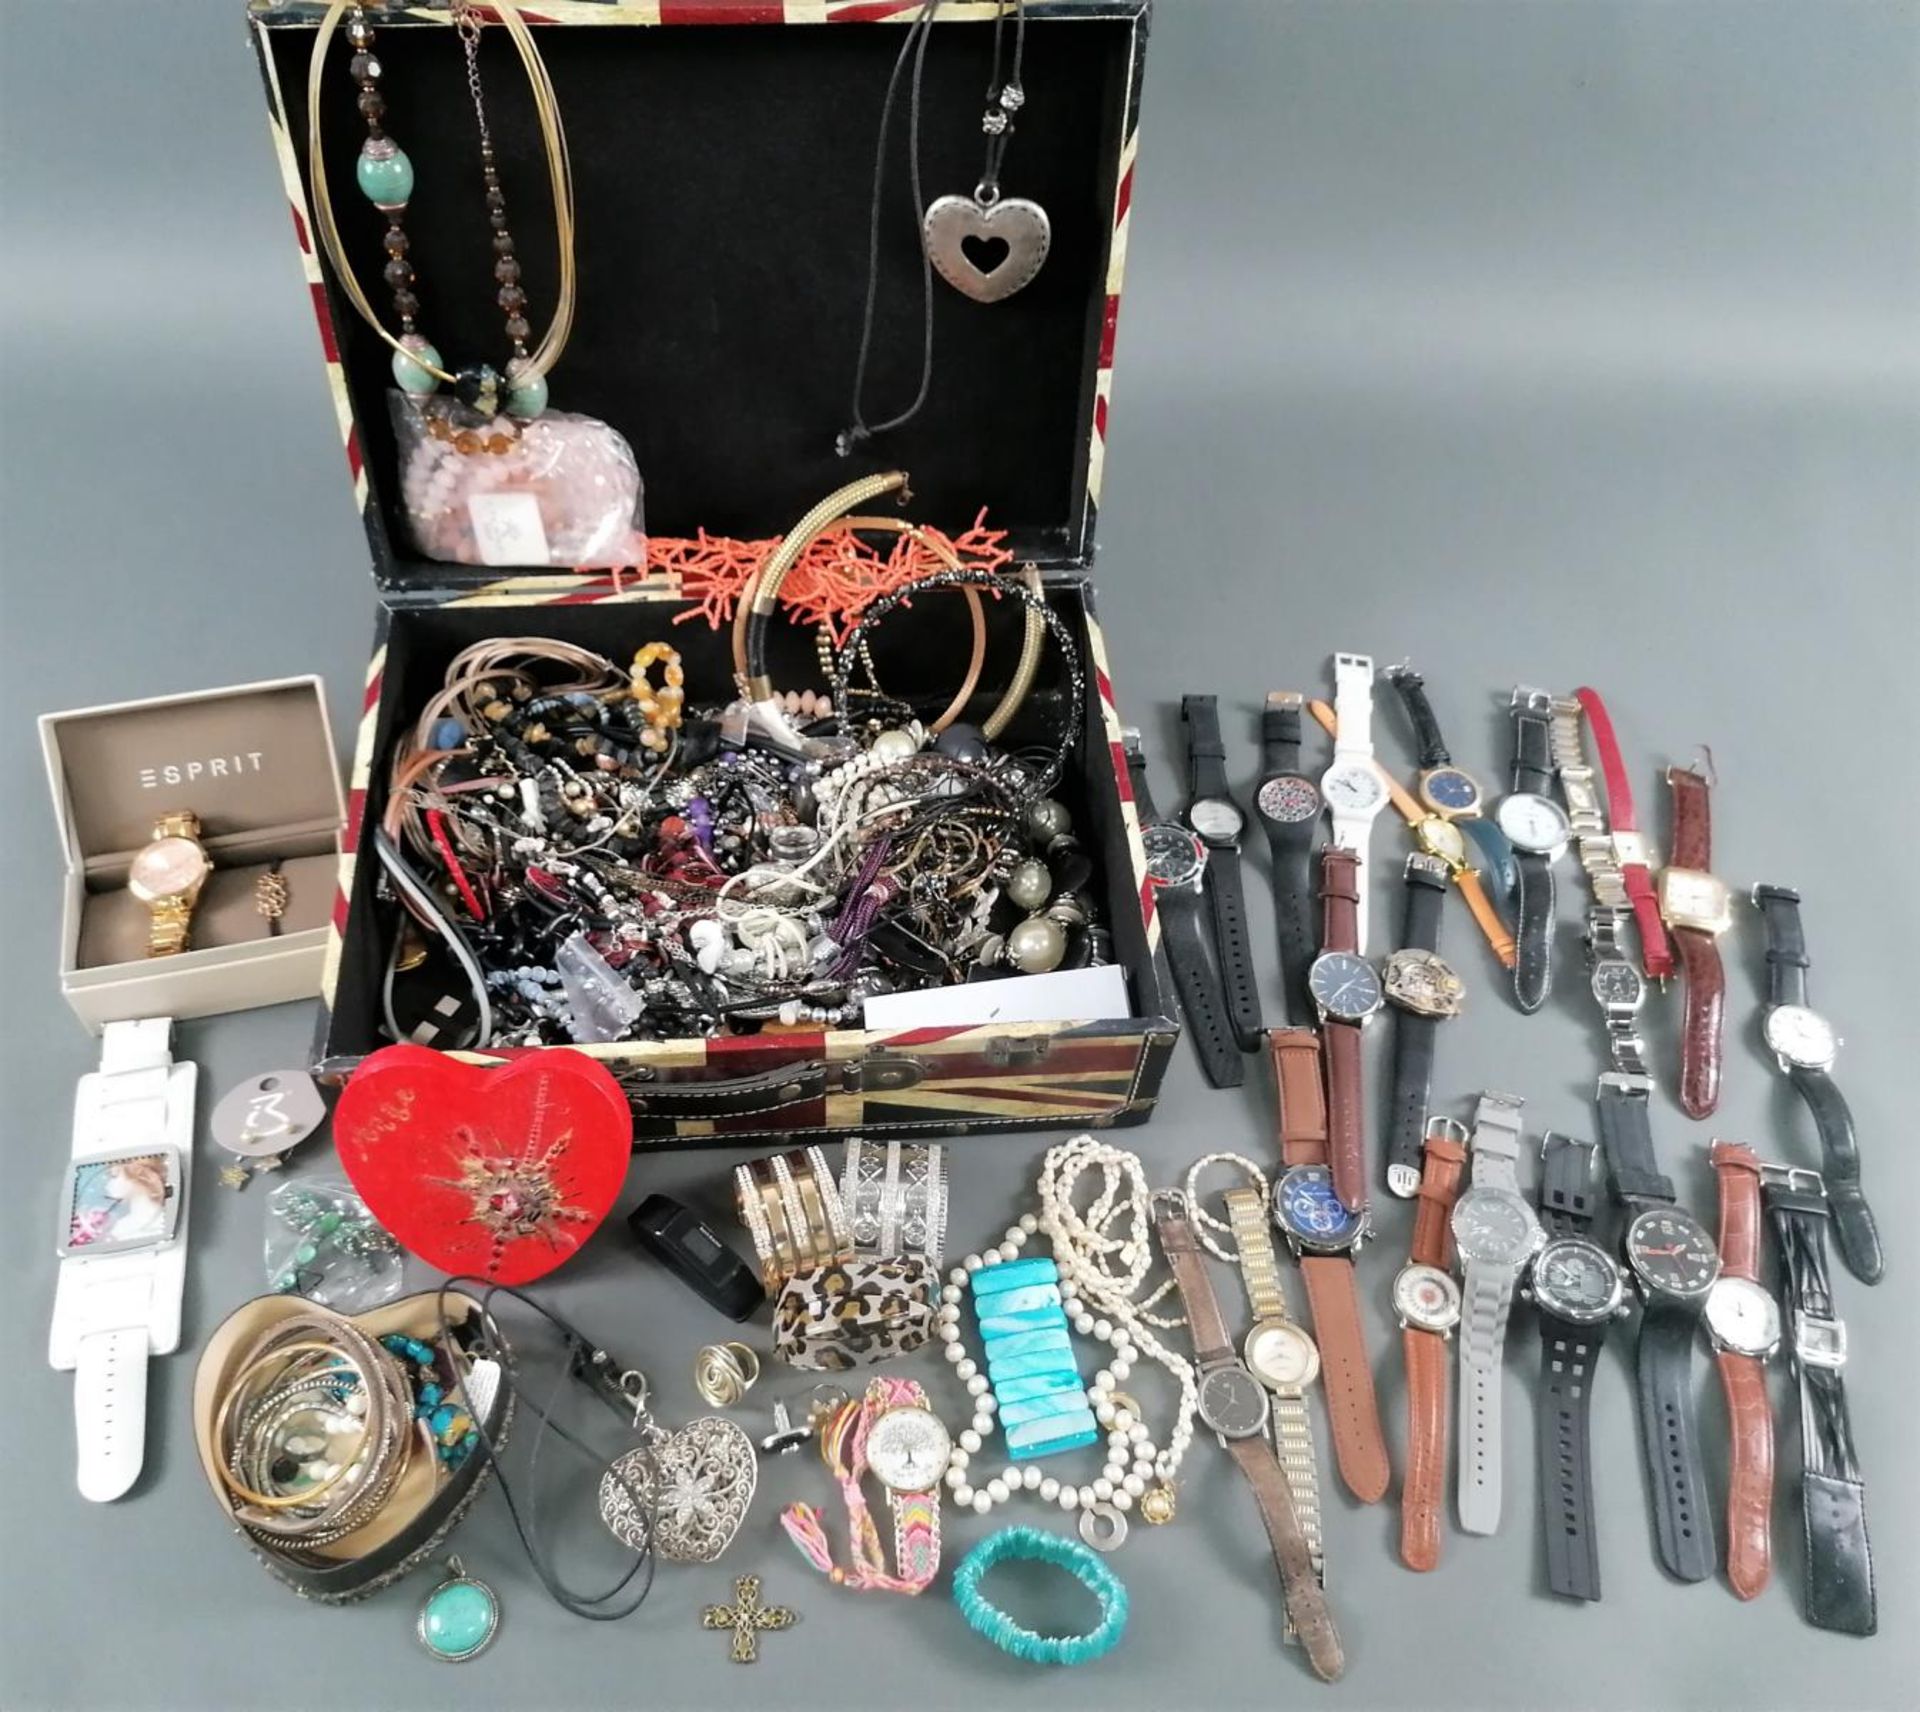 Großes Konvolut Schmuck, Armbanduhren und Modeschmuck im Koffer